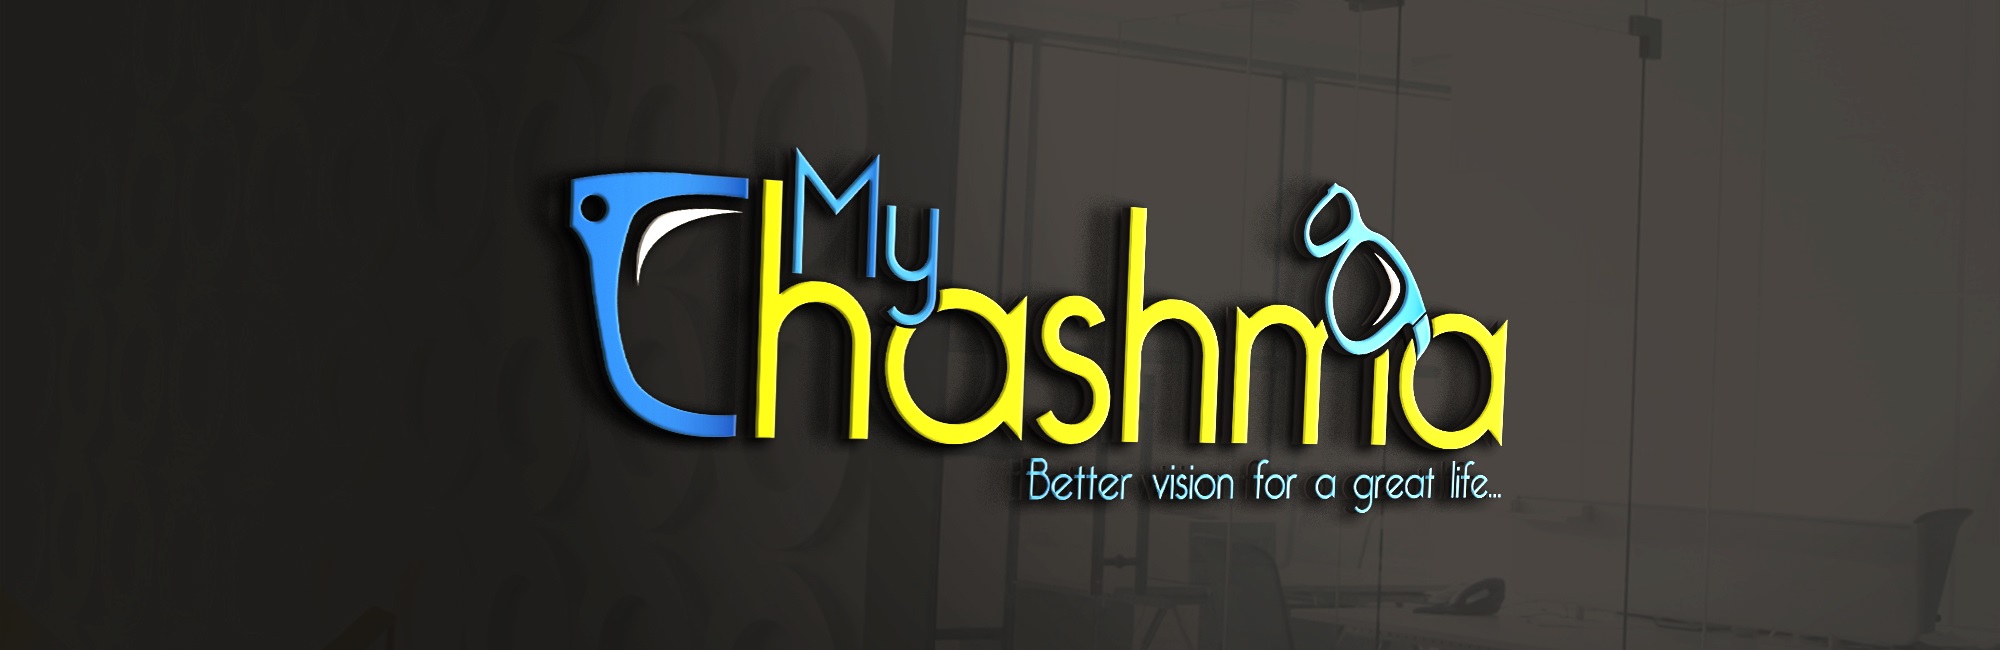 MyChashma about-us